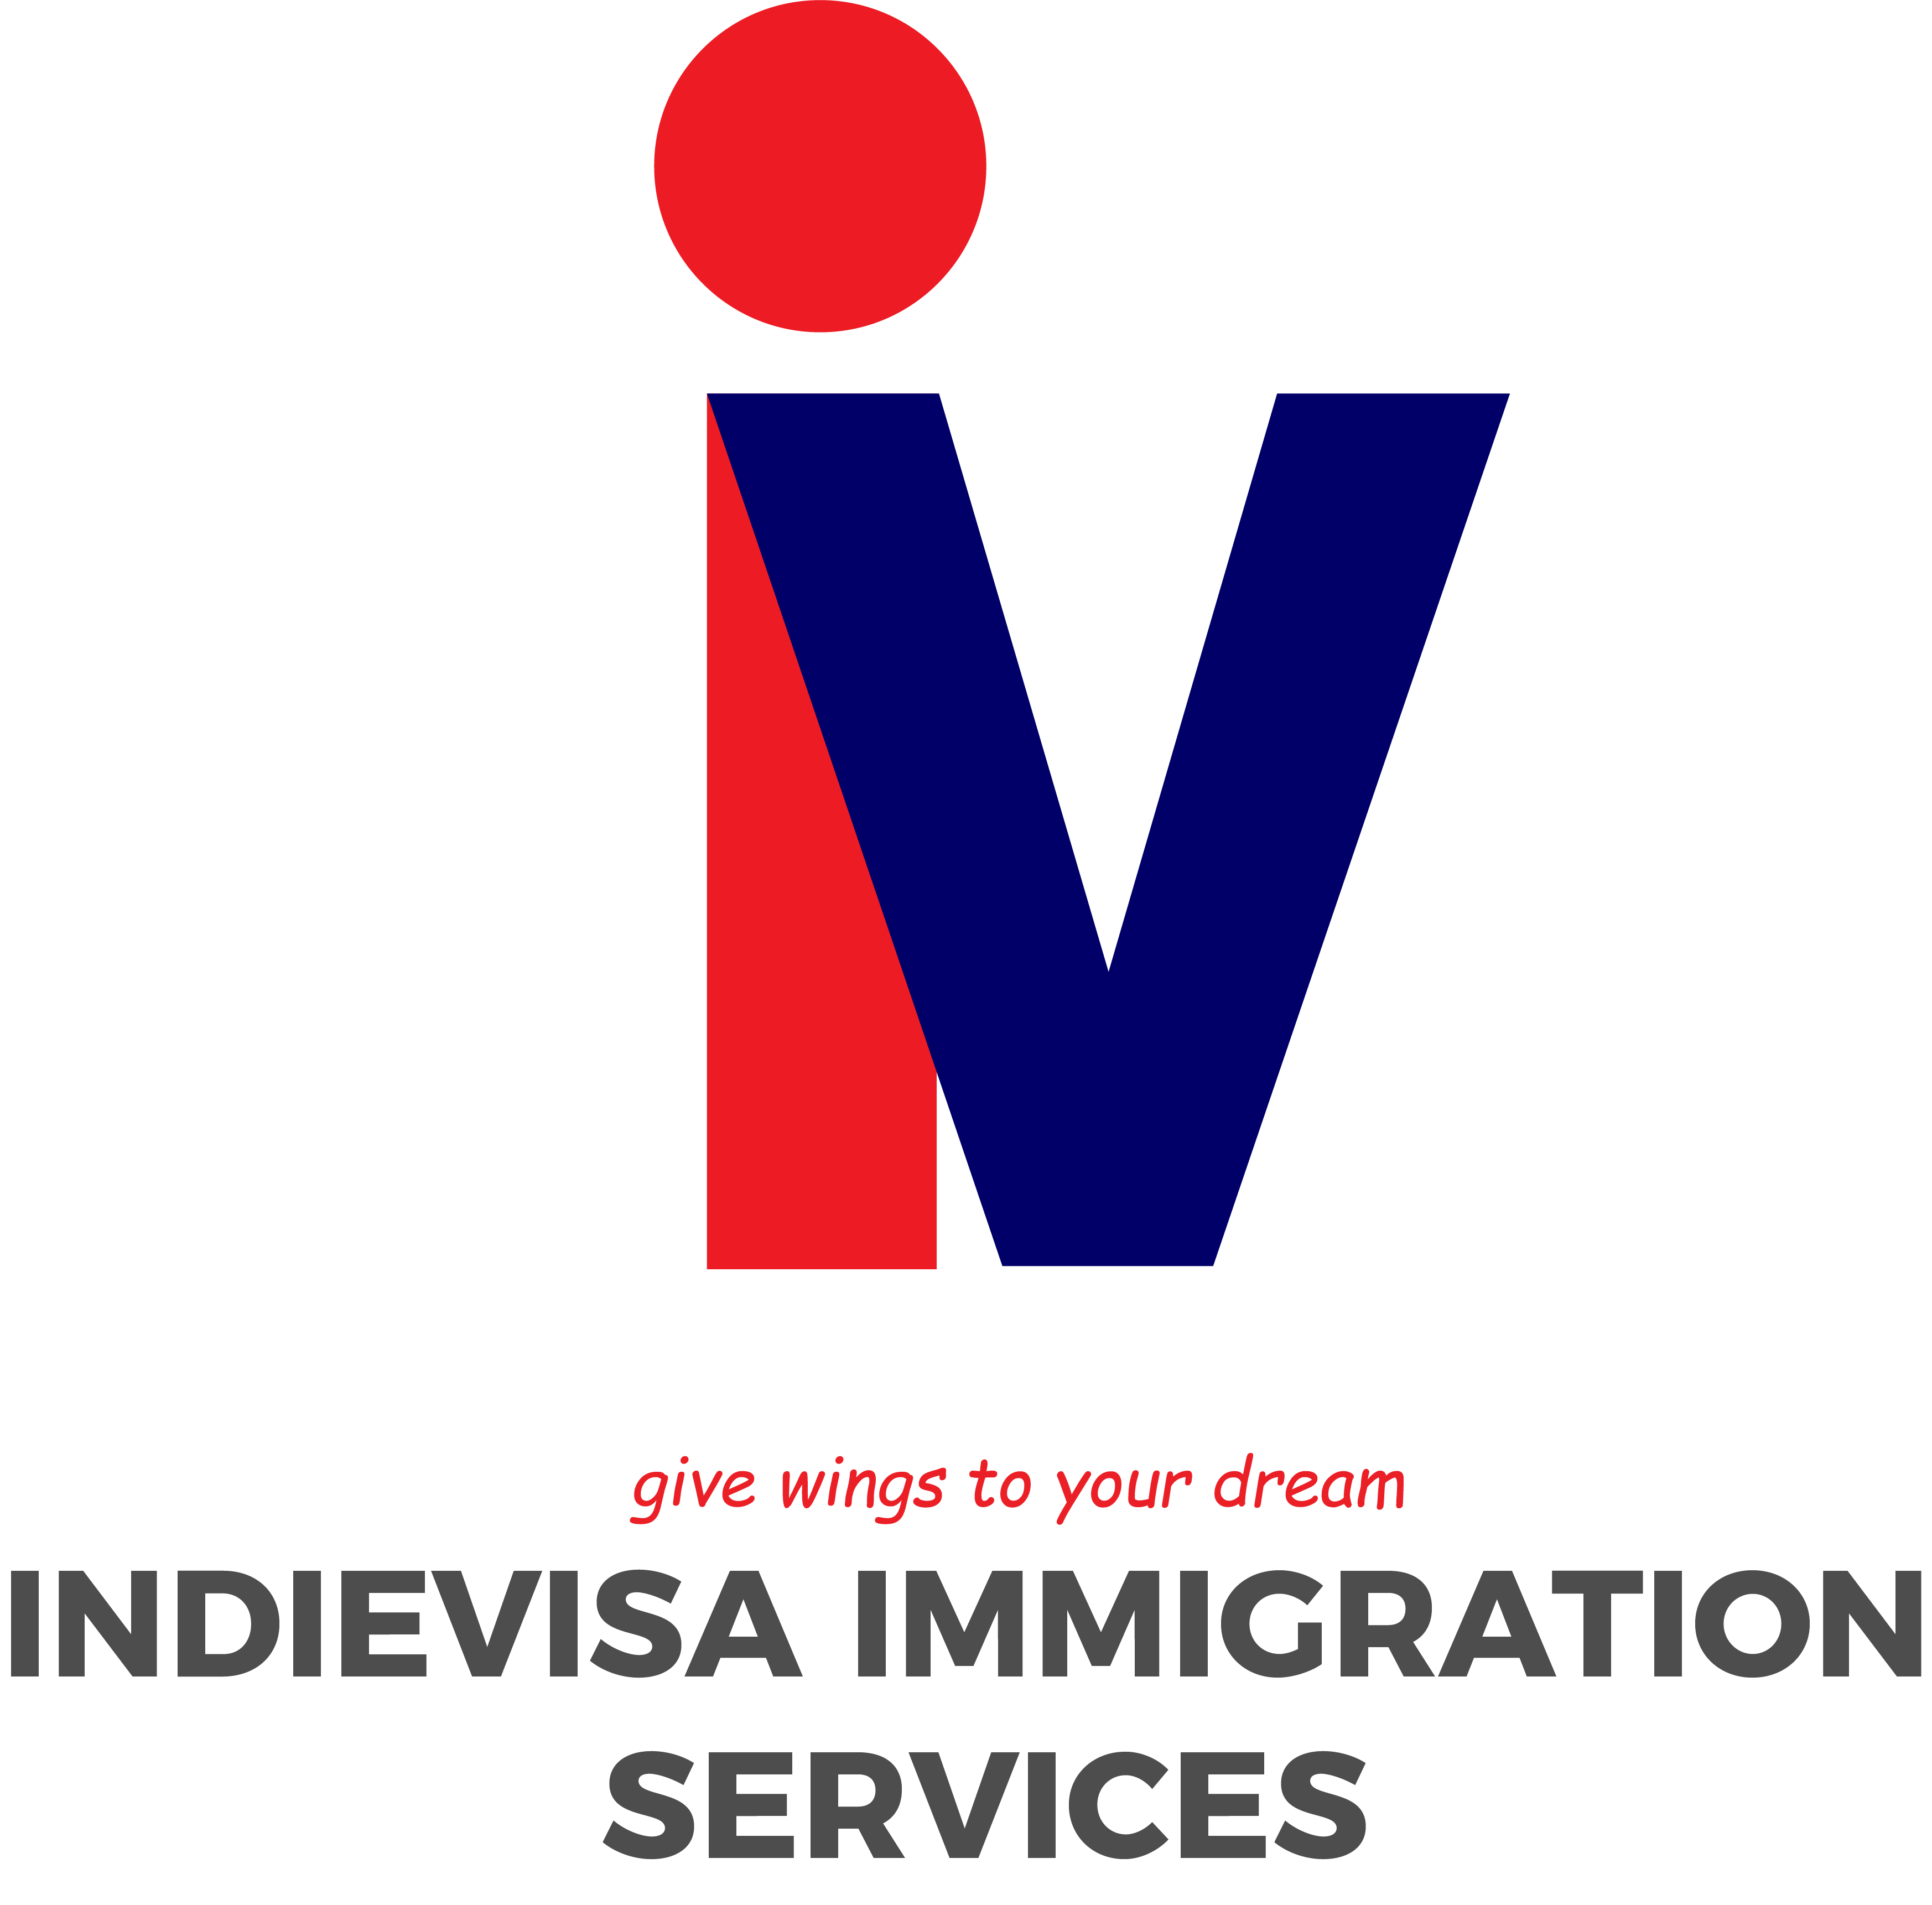 INDIEVISA IMMIGRATION SERVICES PVT.LTD|Museums|Travel